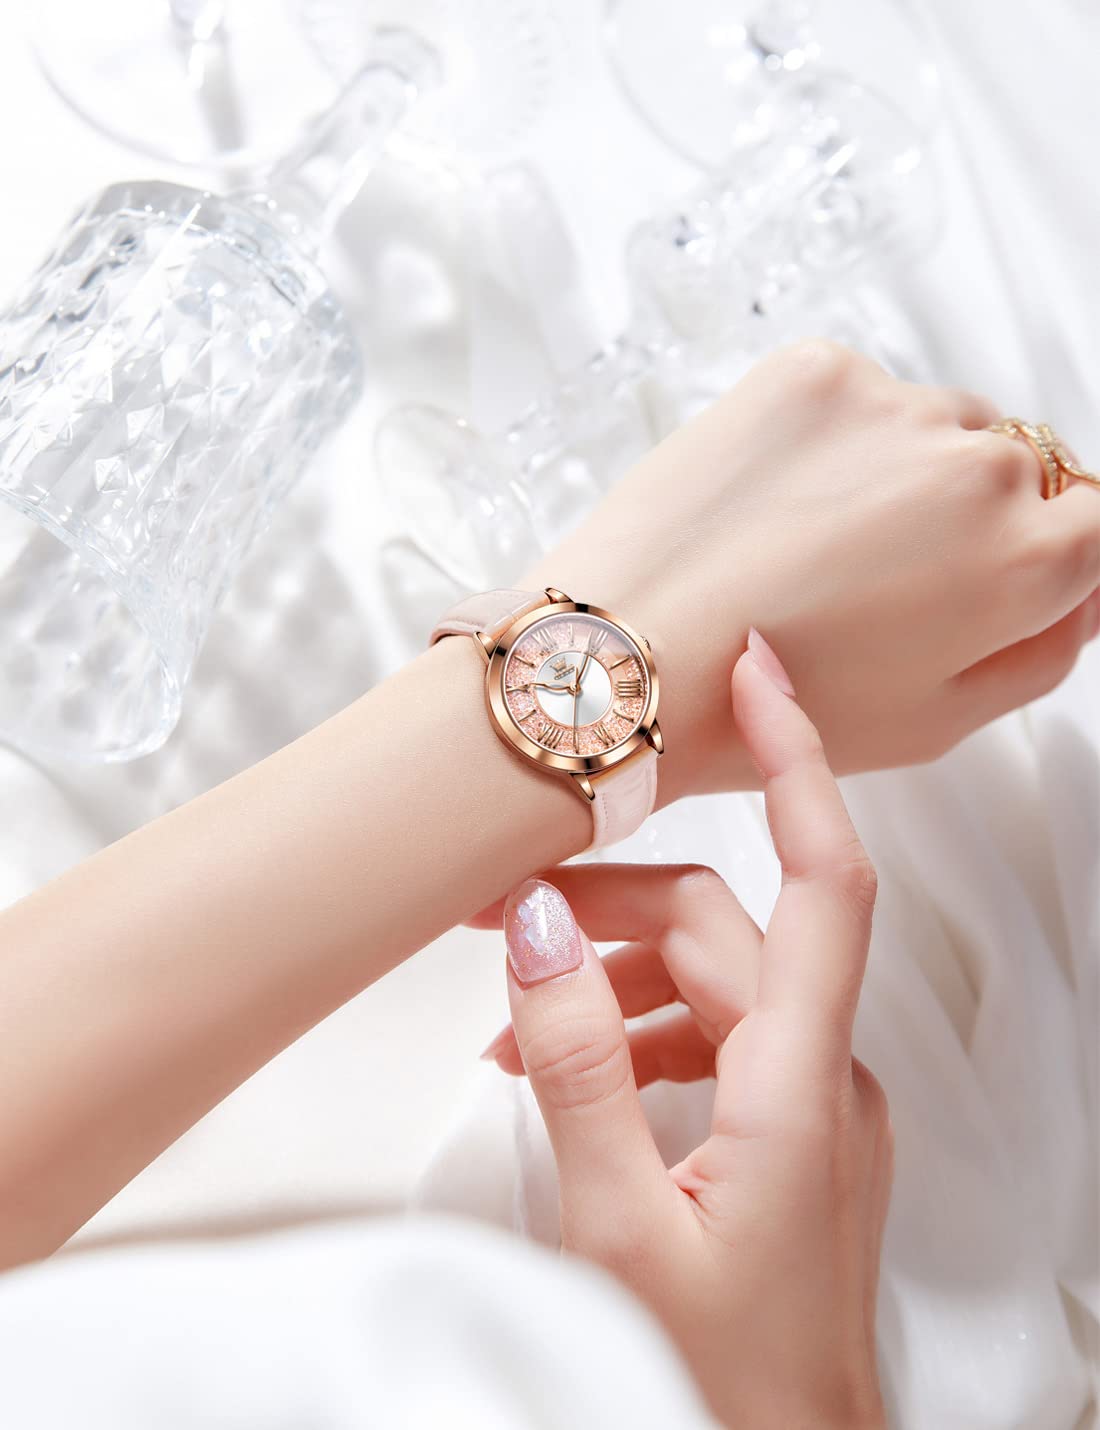 OLEVS Damen-Armbanduhr, elegantes Kleid, Diamant-Damenuhren für Damen, analog, Quarz, Leder, wasserdicht, Treibsand, großes Zifferblatt, Armbanduhr